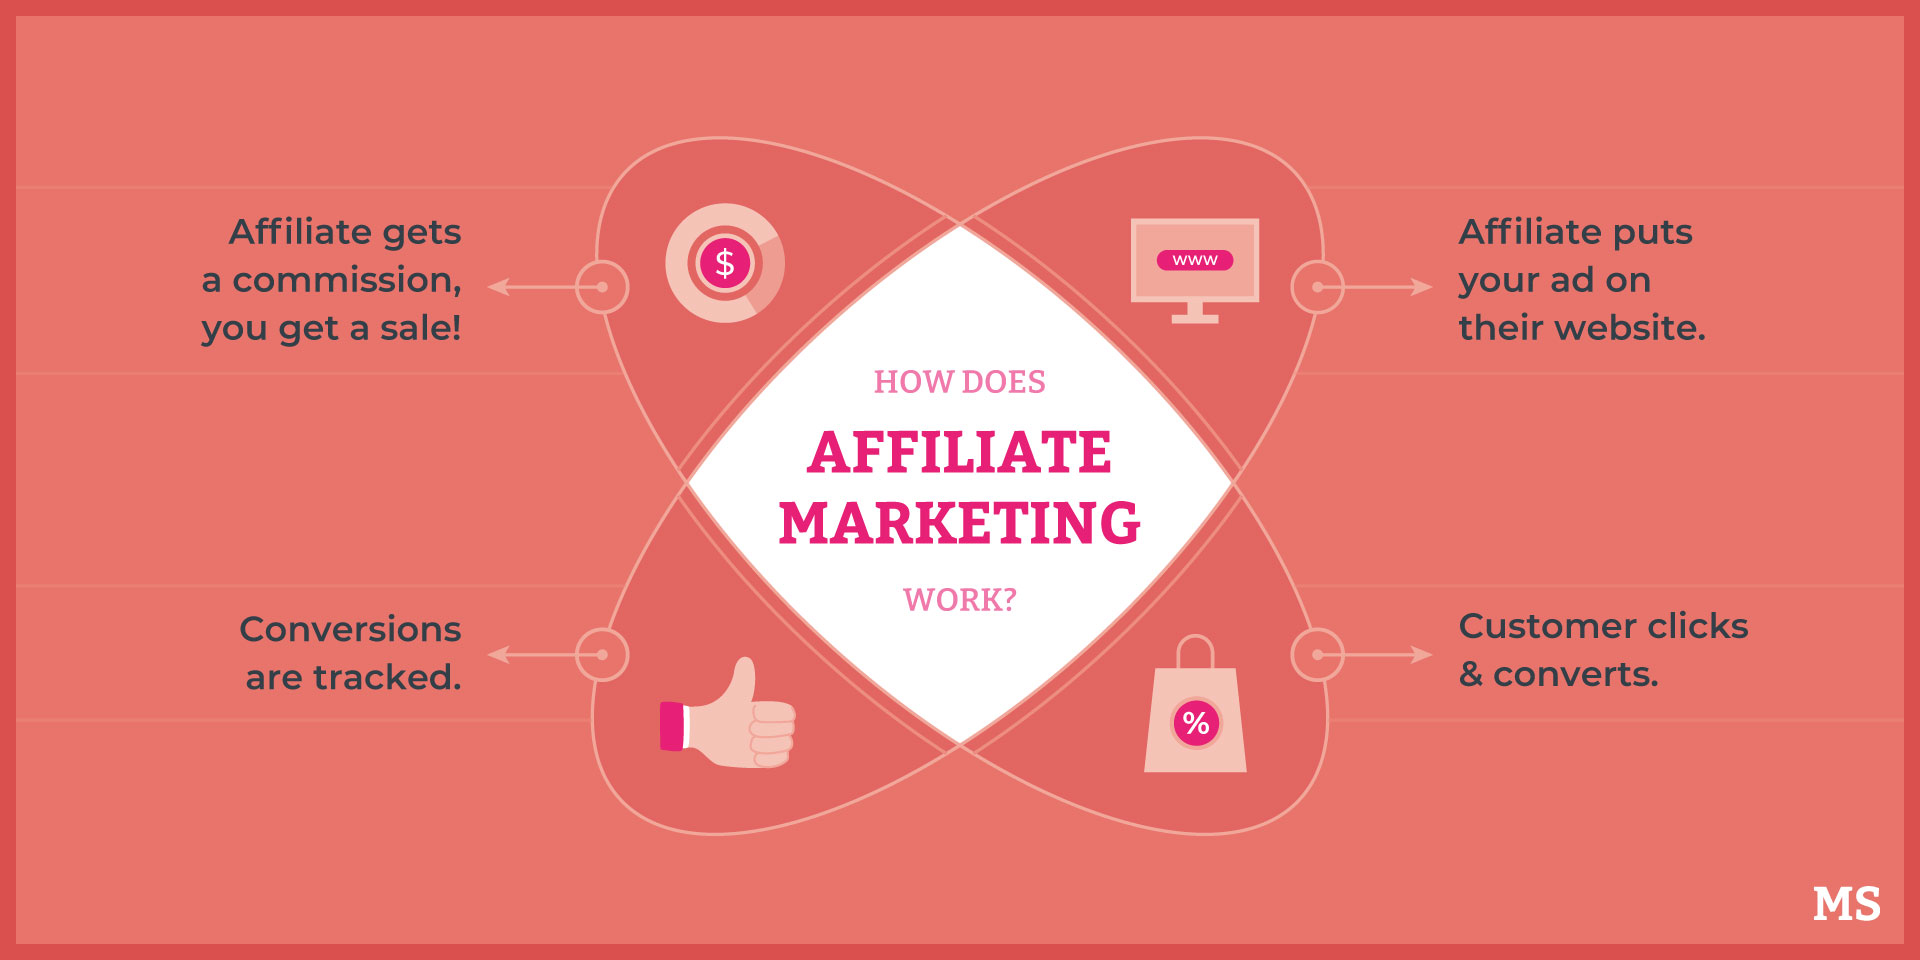 ،w does affiliate marketing work?